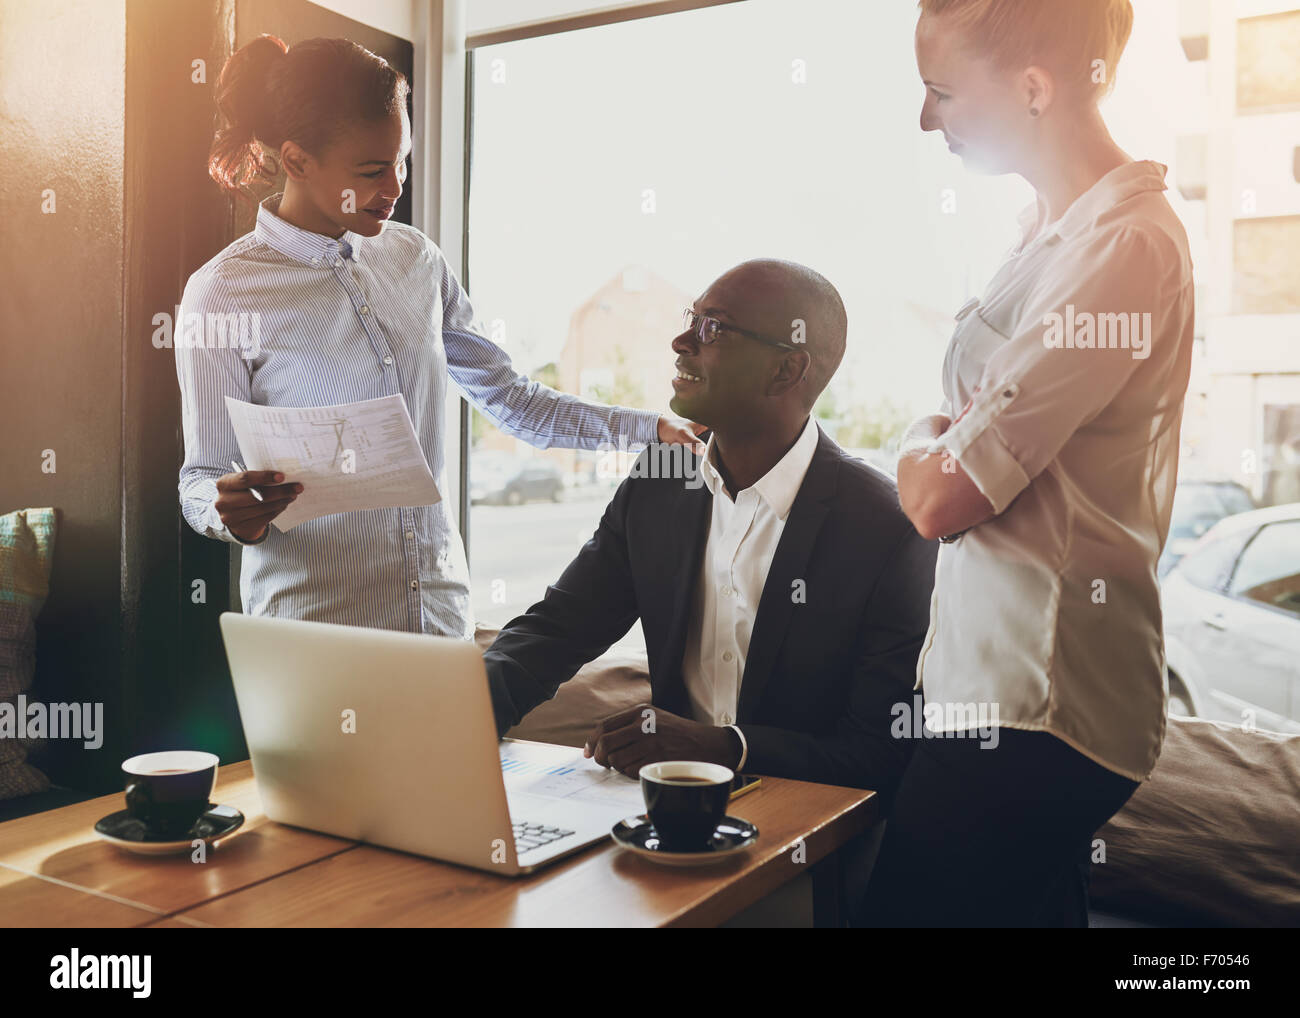 Business people teamwork, multi ethnic group, business, entrepreneur, start up concept Stock Photo